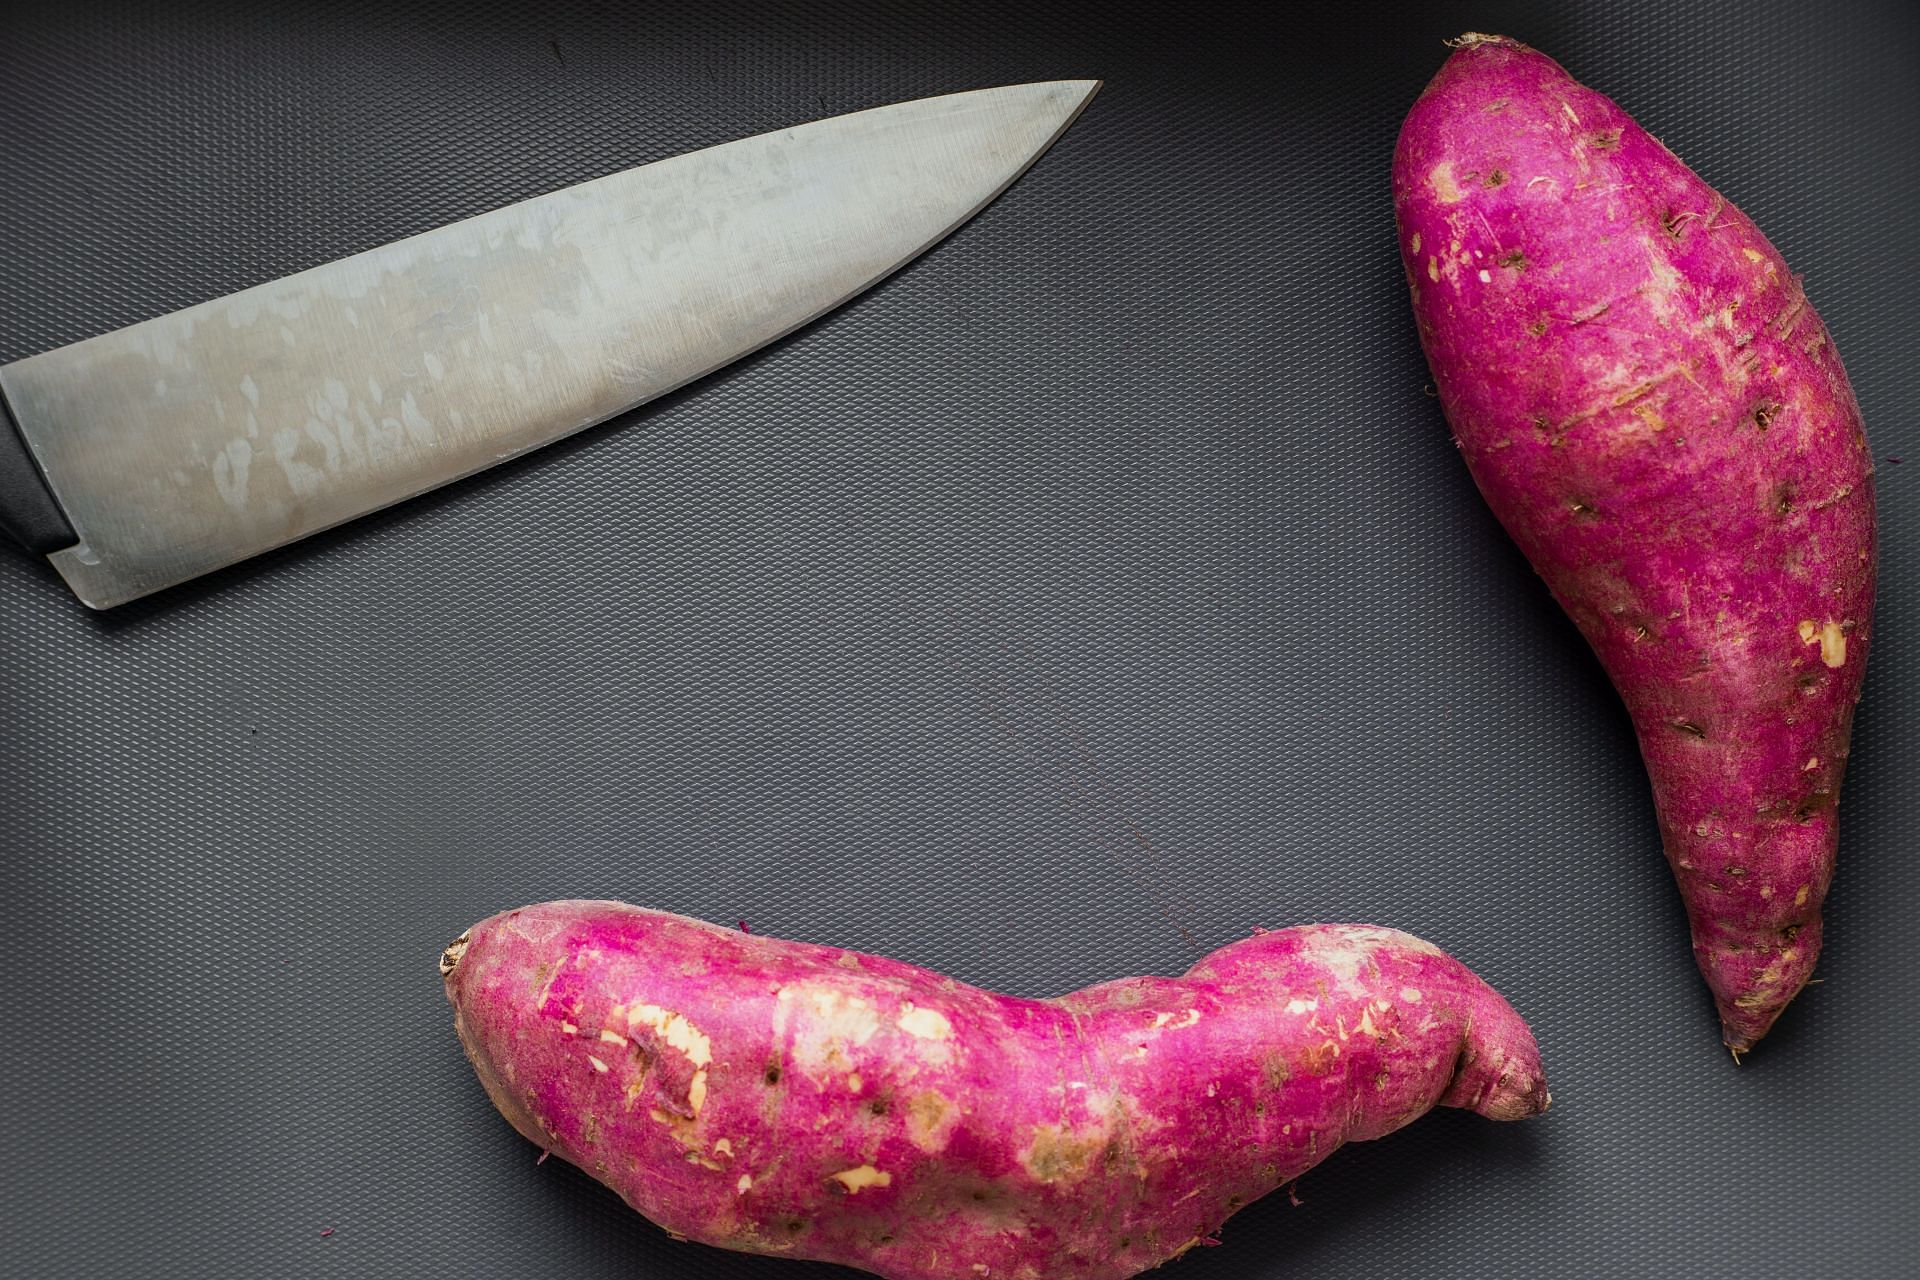 Sweet Potatoes Have Several Health Benefits (Image via Unsplash/Louis Hansel)